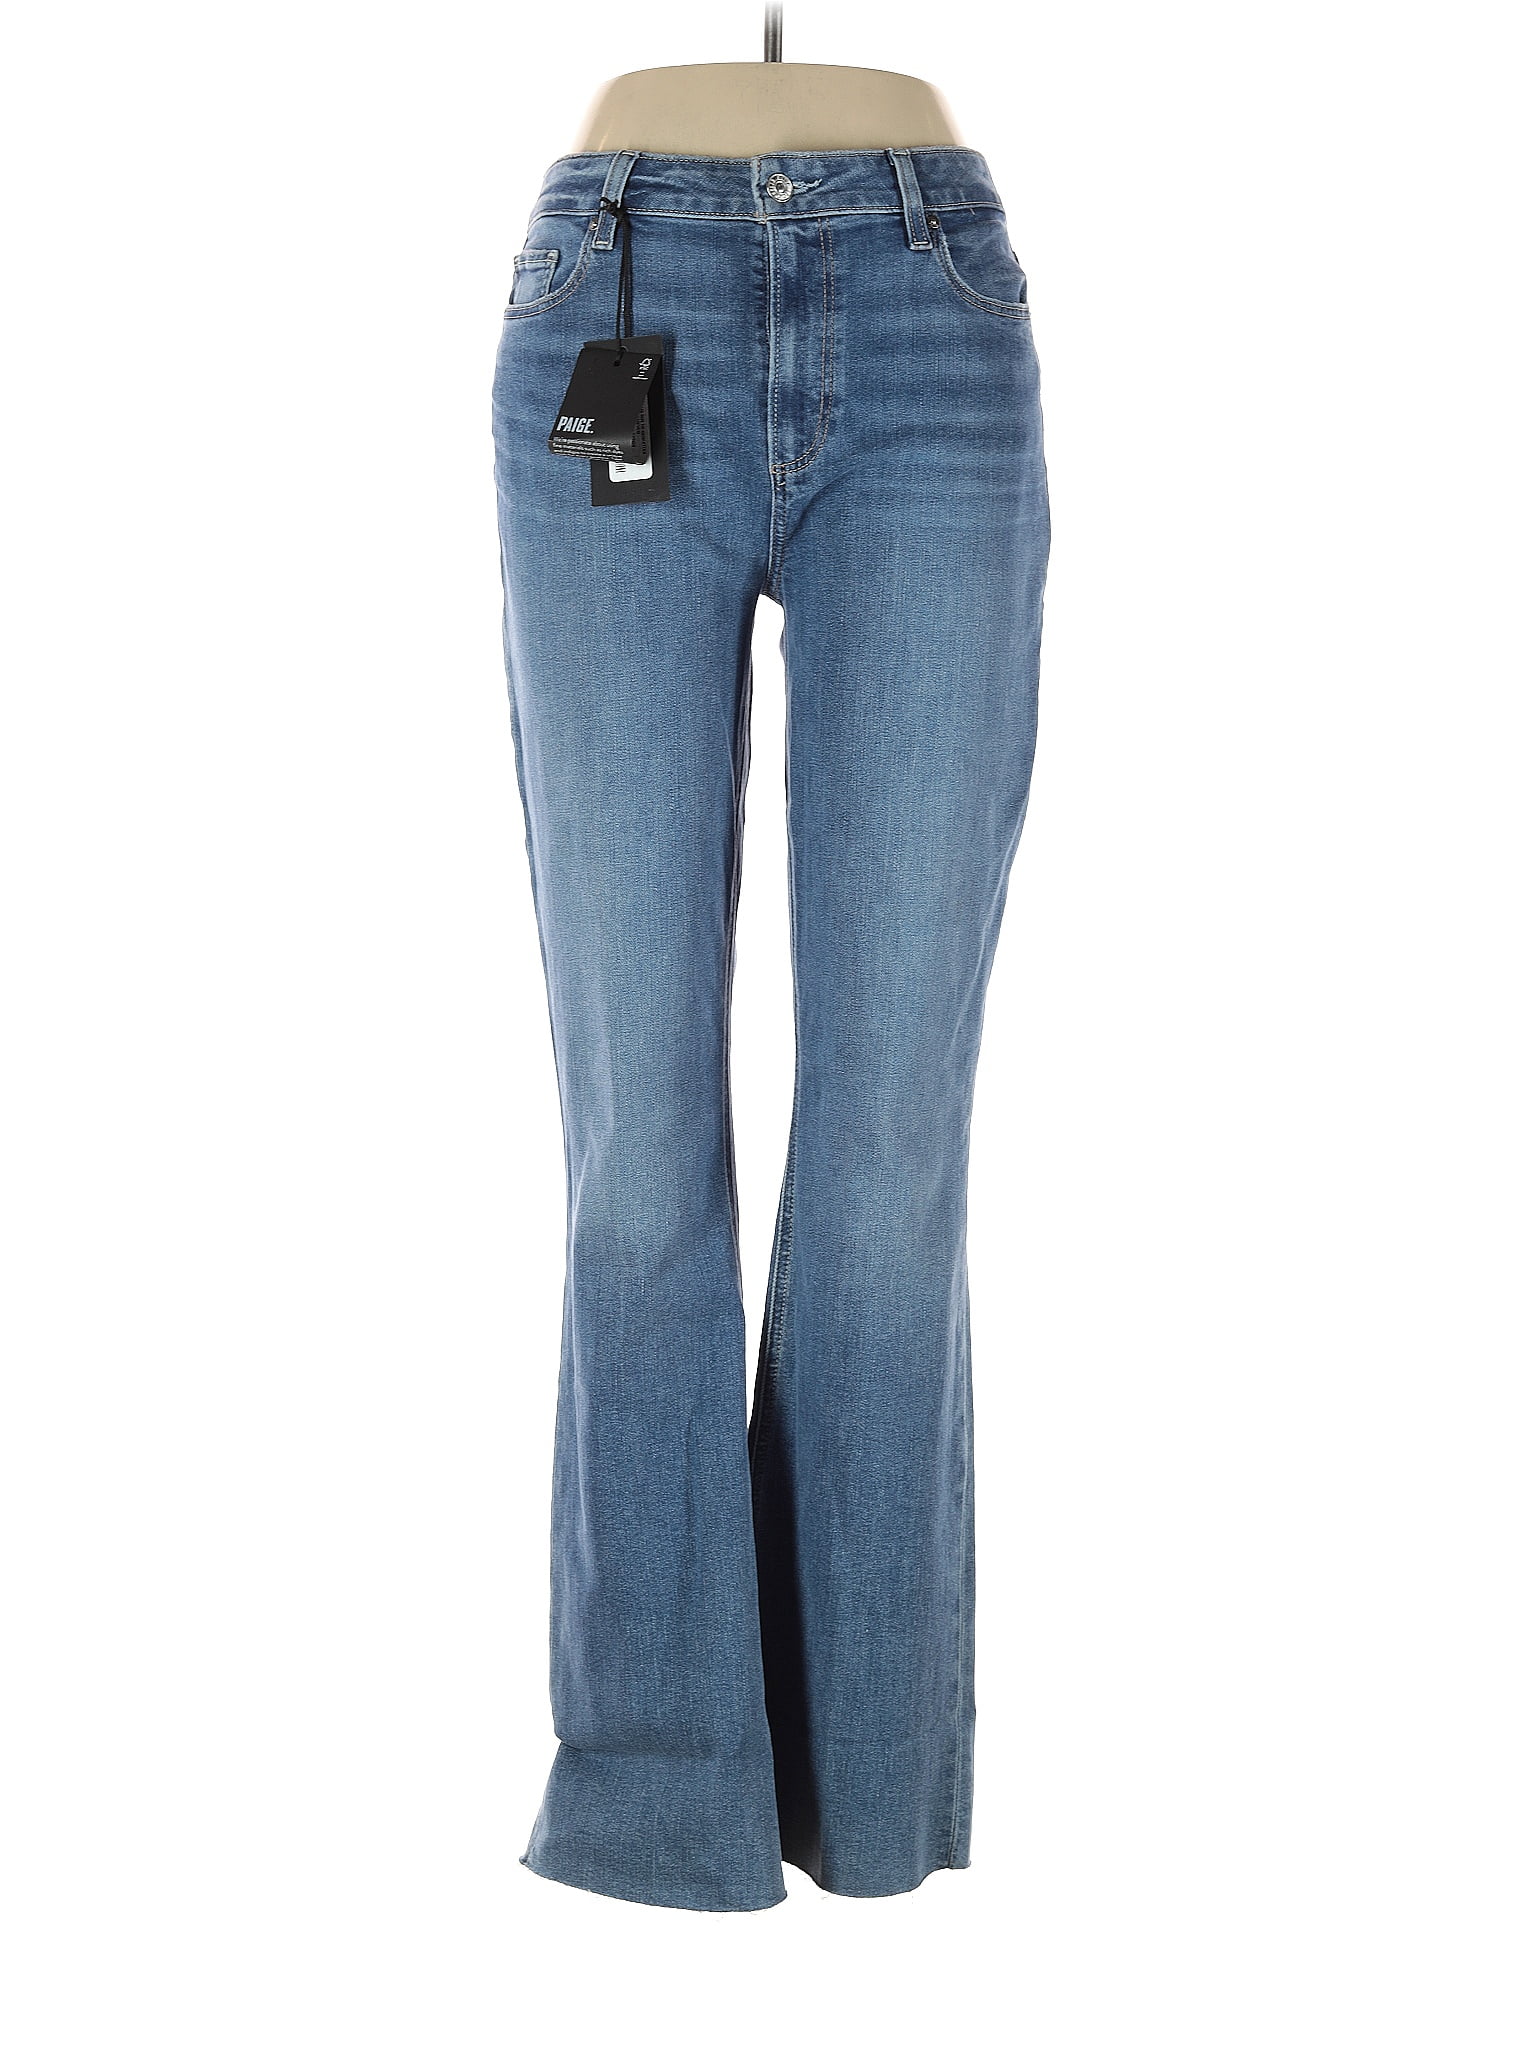 Paige Solid Blue Jeans 32 Waist - 76% off | ThredUp